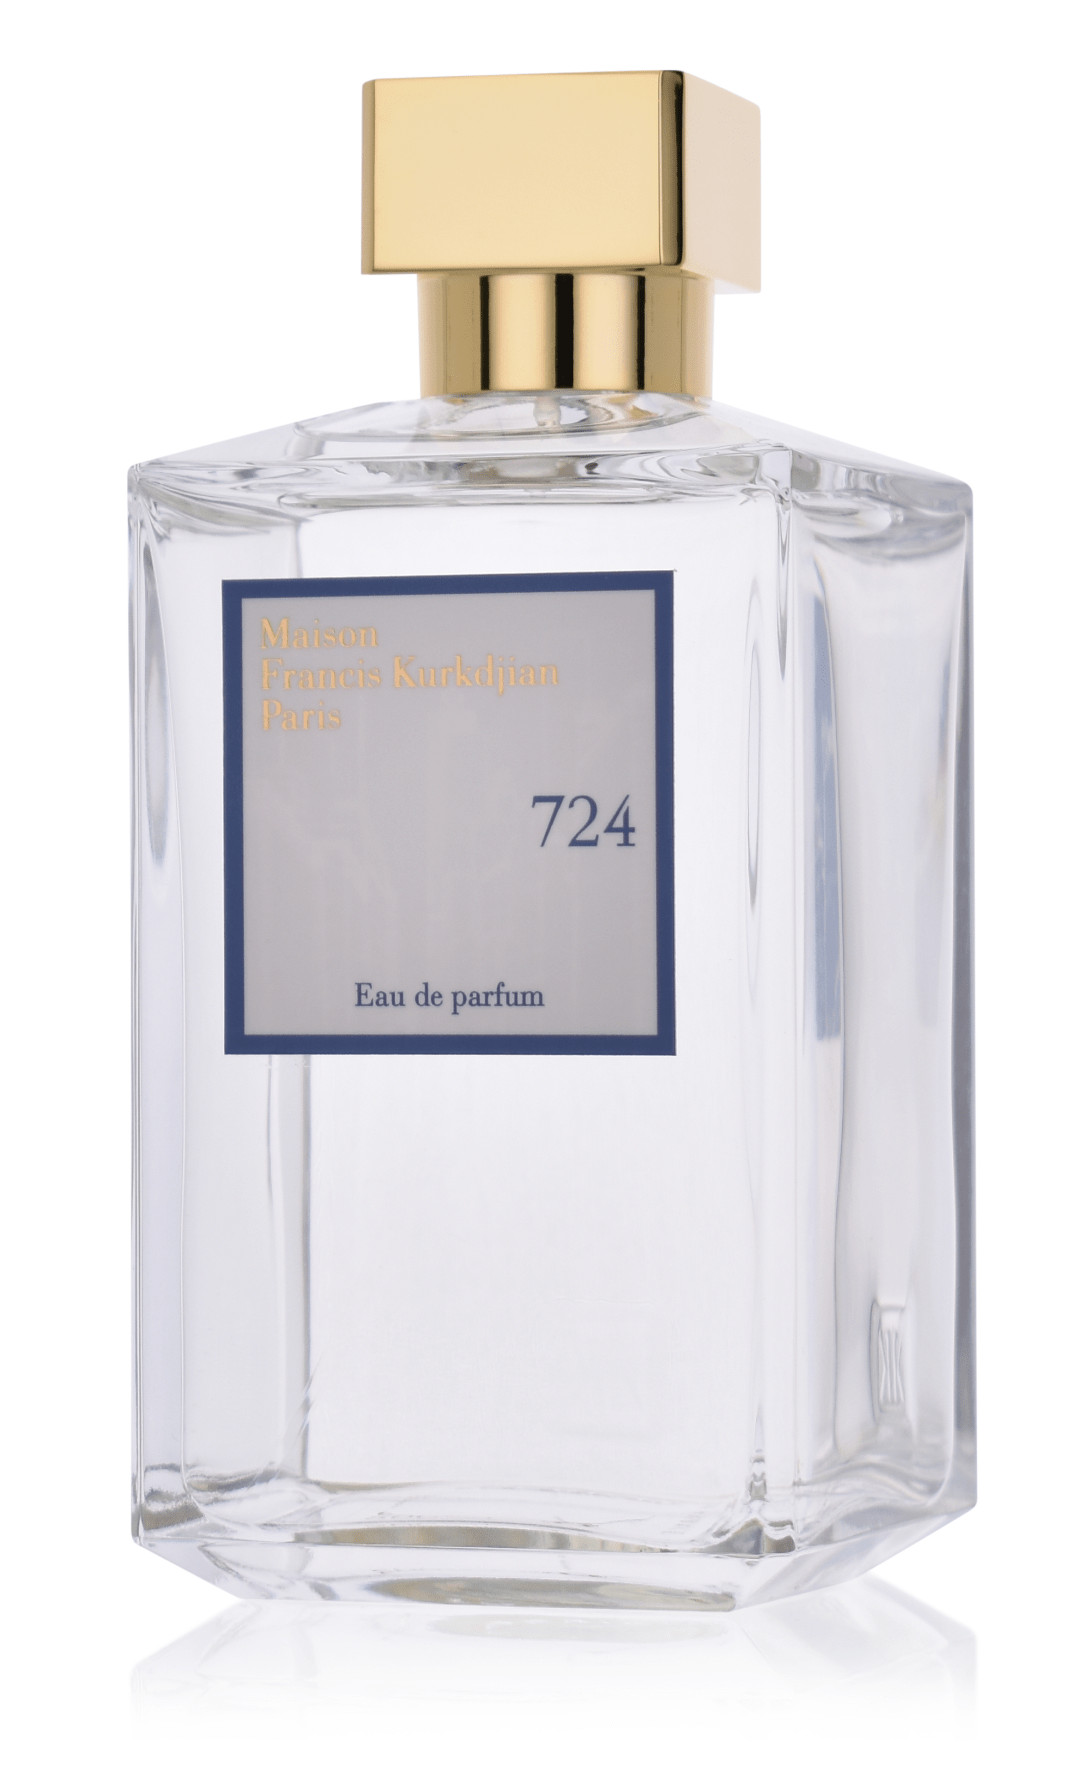 Maison Francis Kurkdjian 724 Eau de Parfum 200 ml